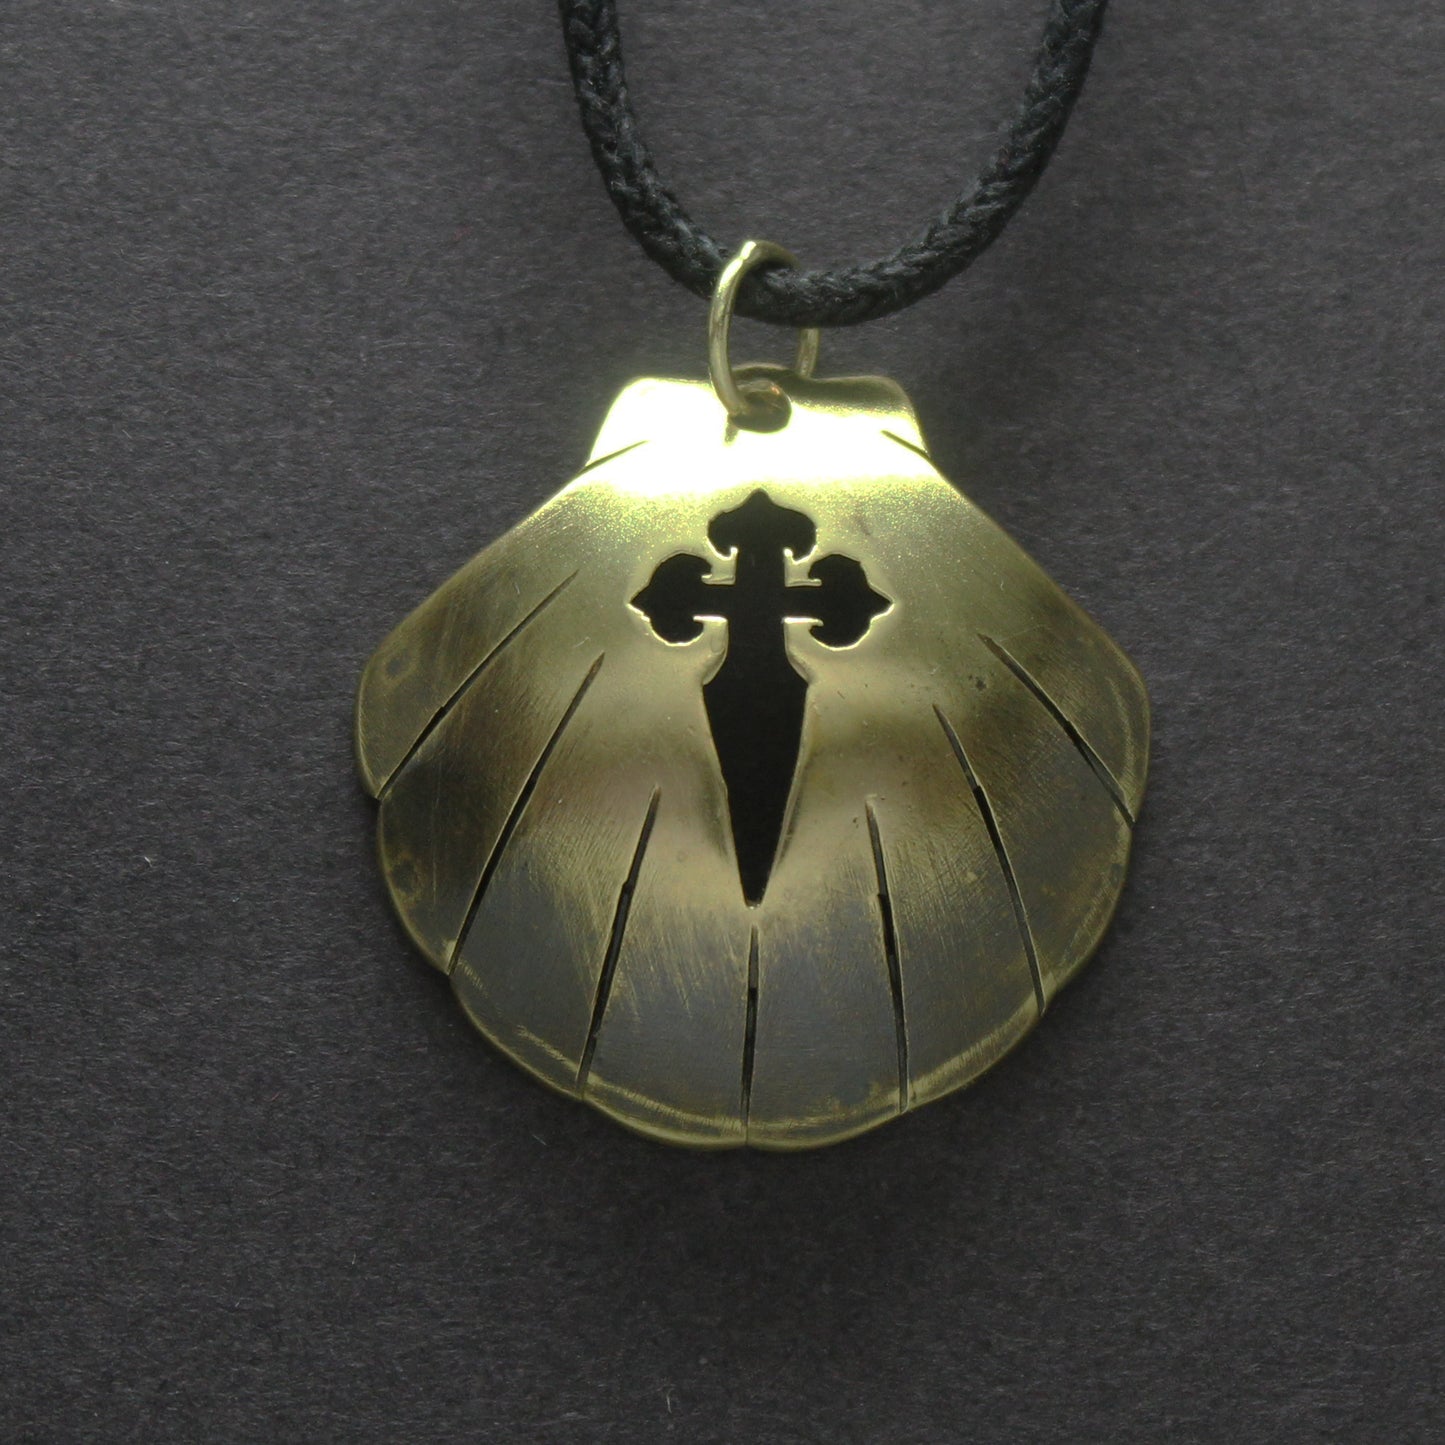 Shell of the Camino de Santiago with Cross of Santiago, brass pendant